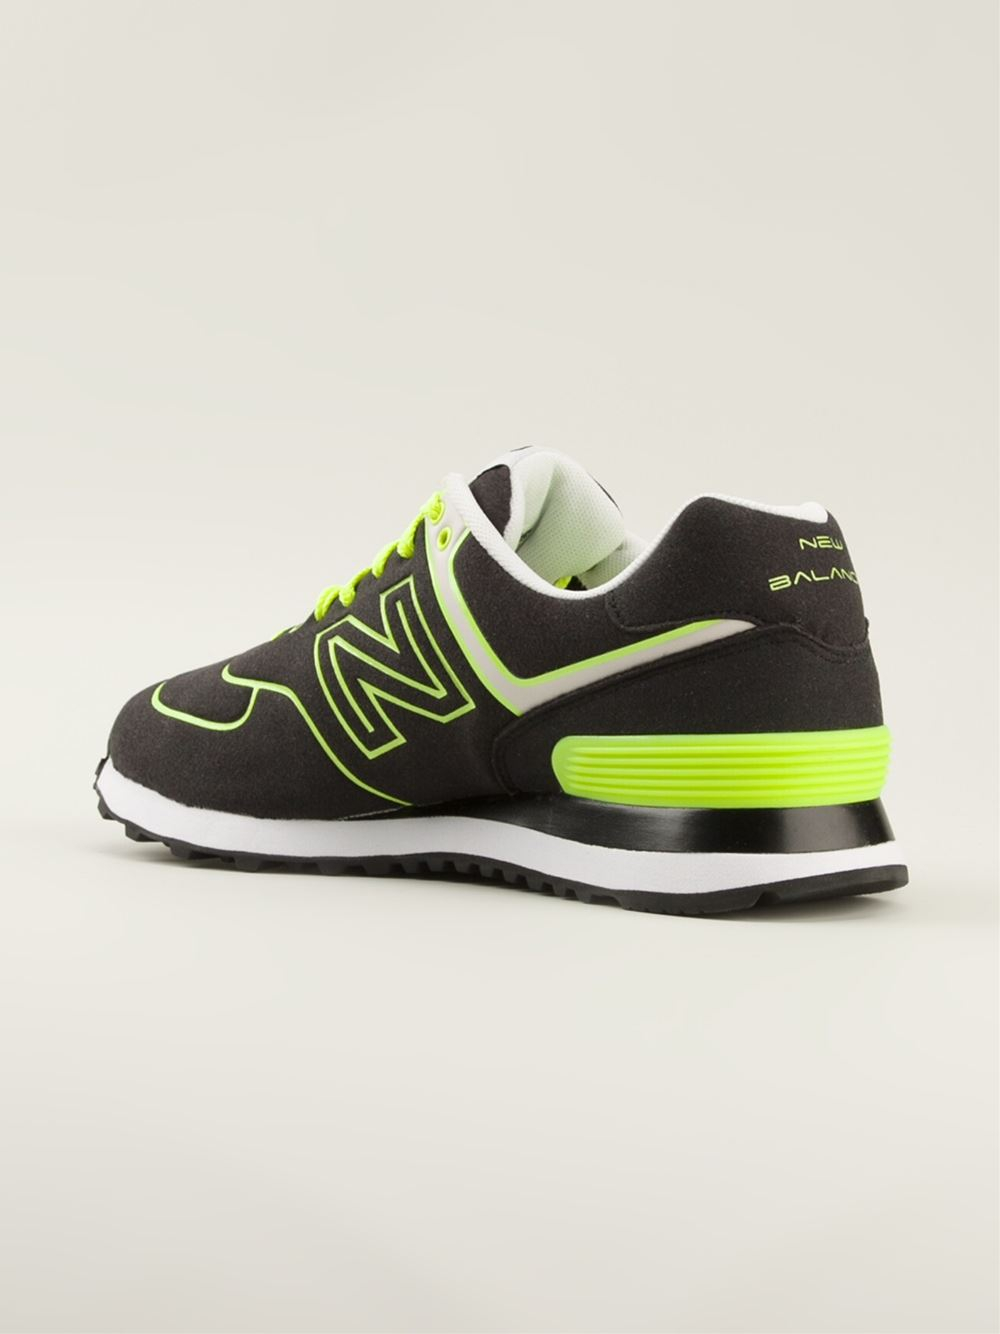 New Balance 'Neon Lights 574' Sneakers in Black for Men - Lyst